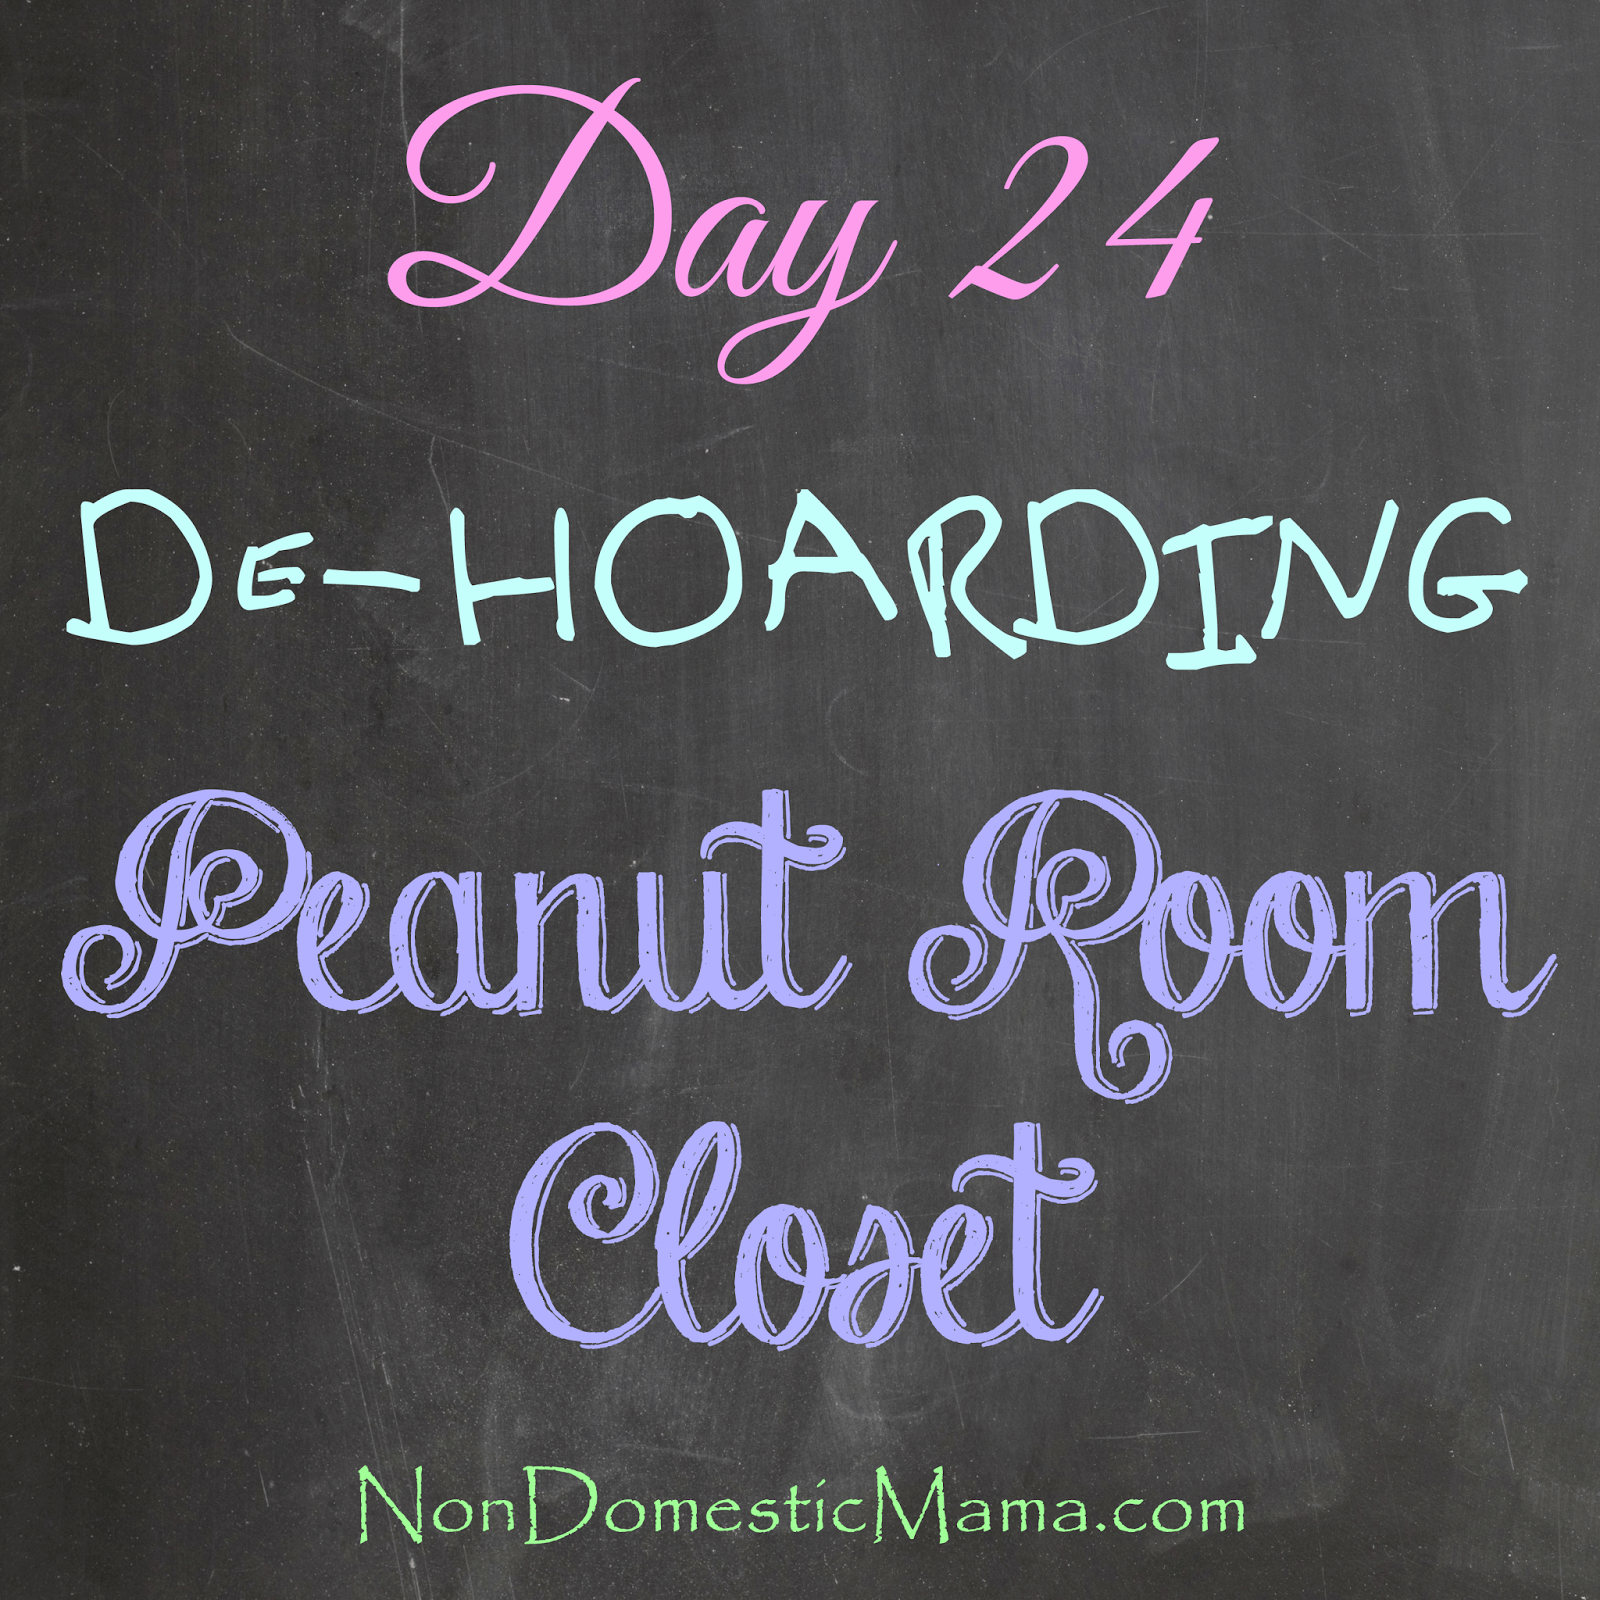 {Day 24} Peanut Closet - 31 Days of De-Hoarding #write31days #dehoarding